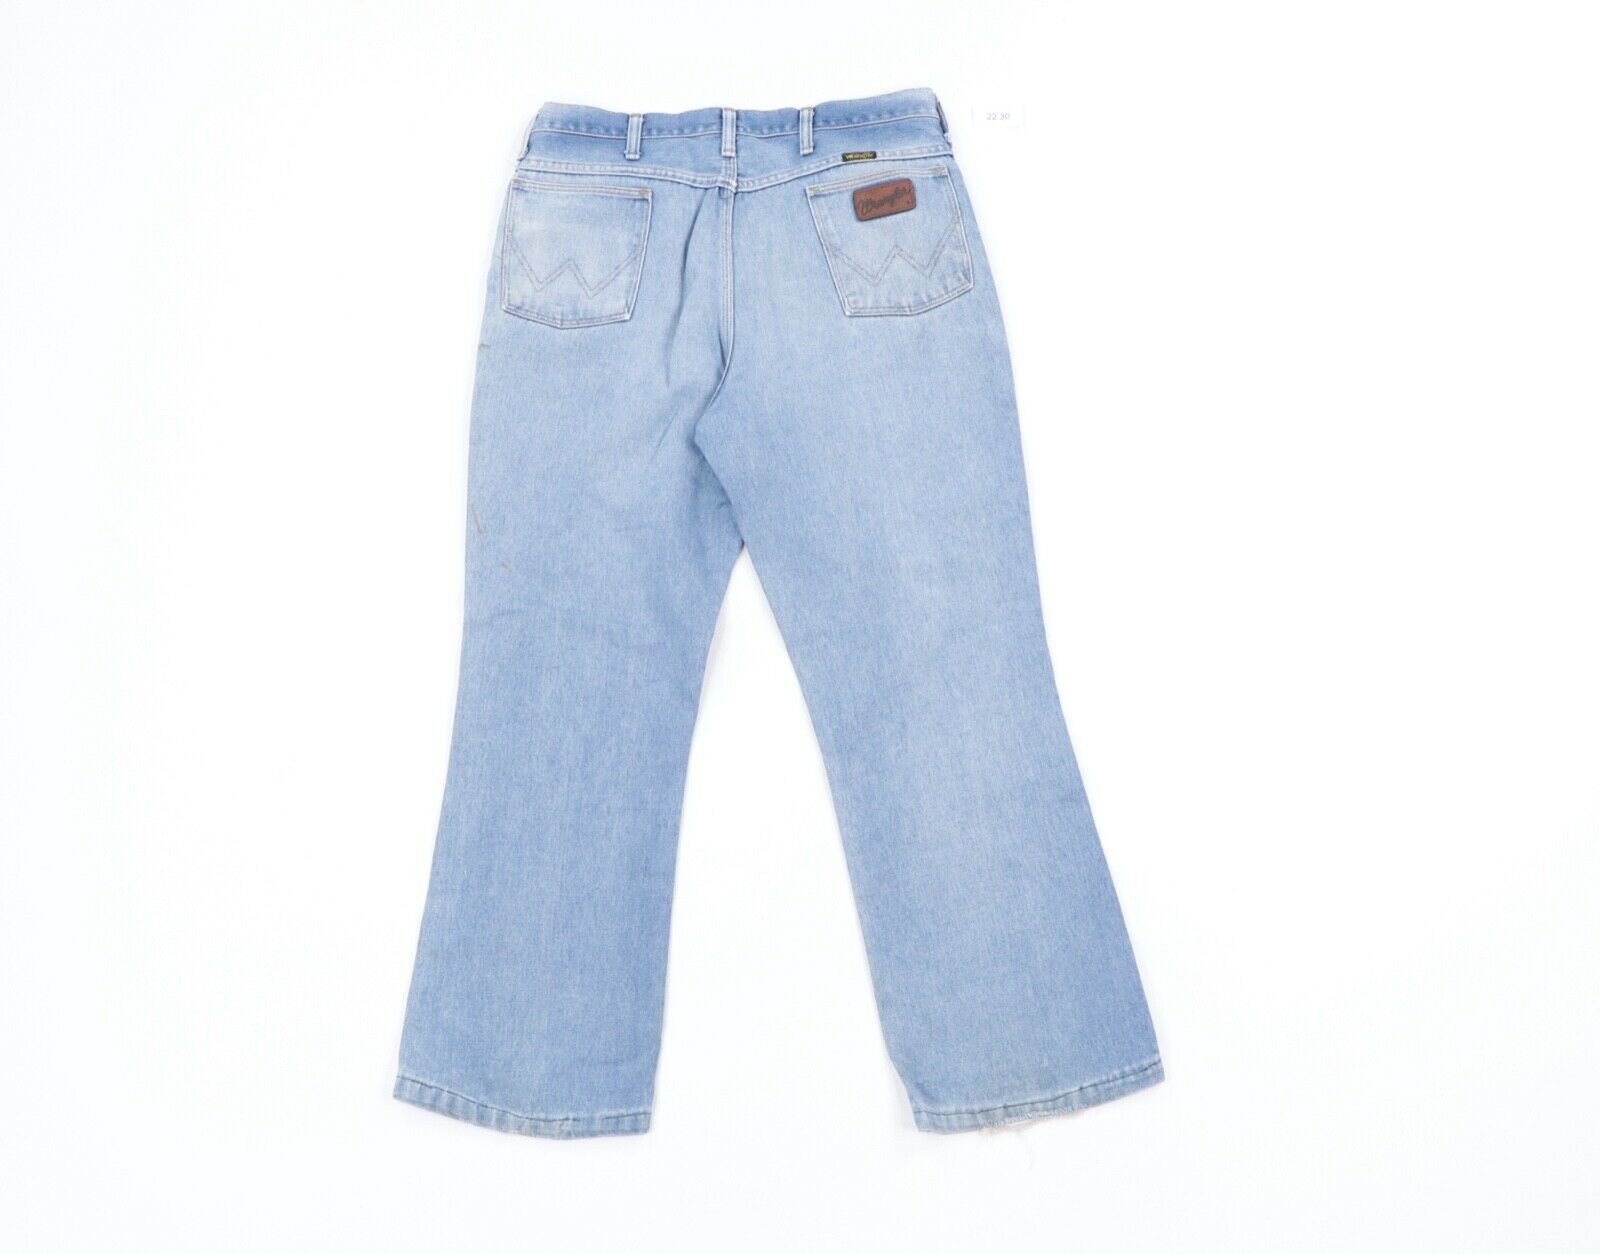 Vintage Vintage 80s Wrangler Bootcut Thrashed Jeans Blue 34x28 Size US 34 / EU 50 - 6 Thumbnail